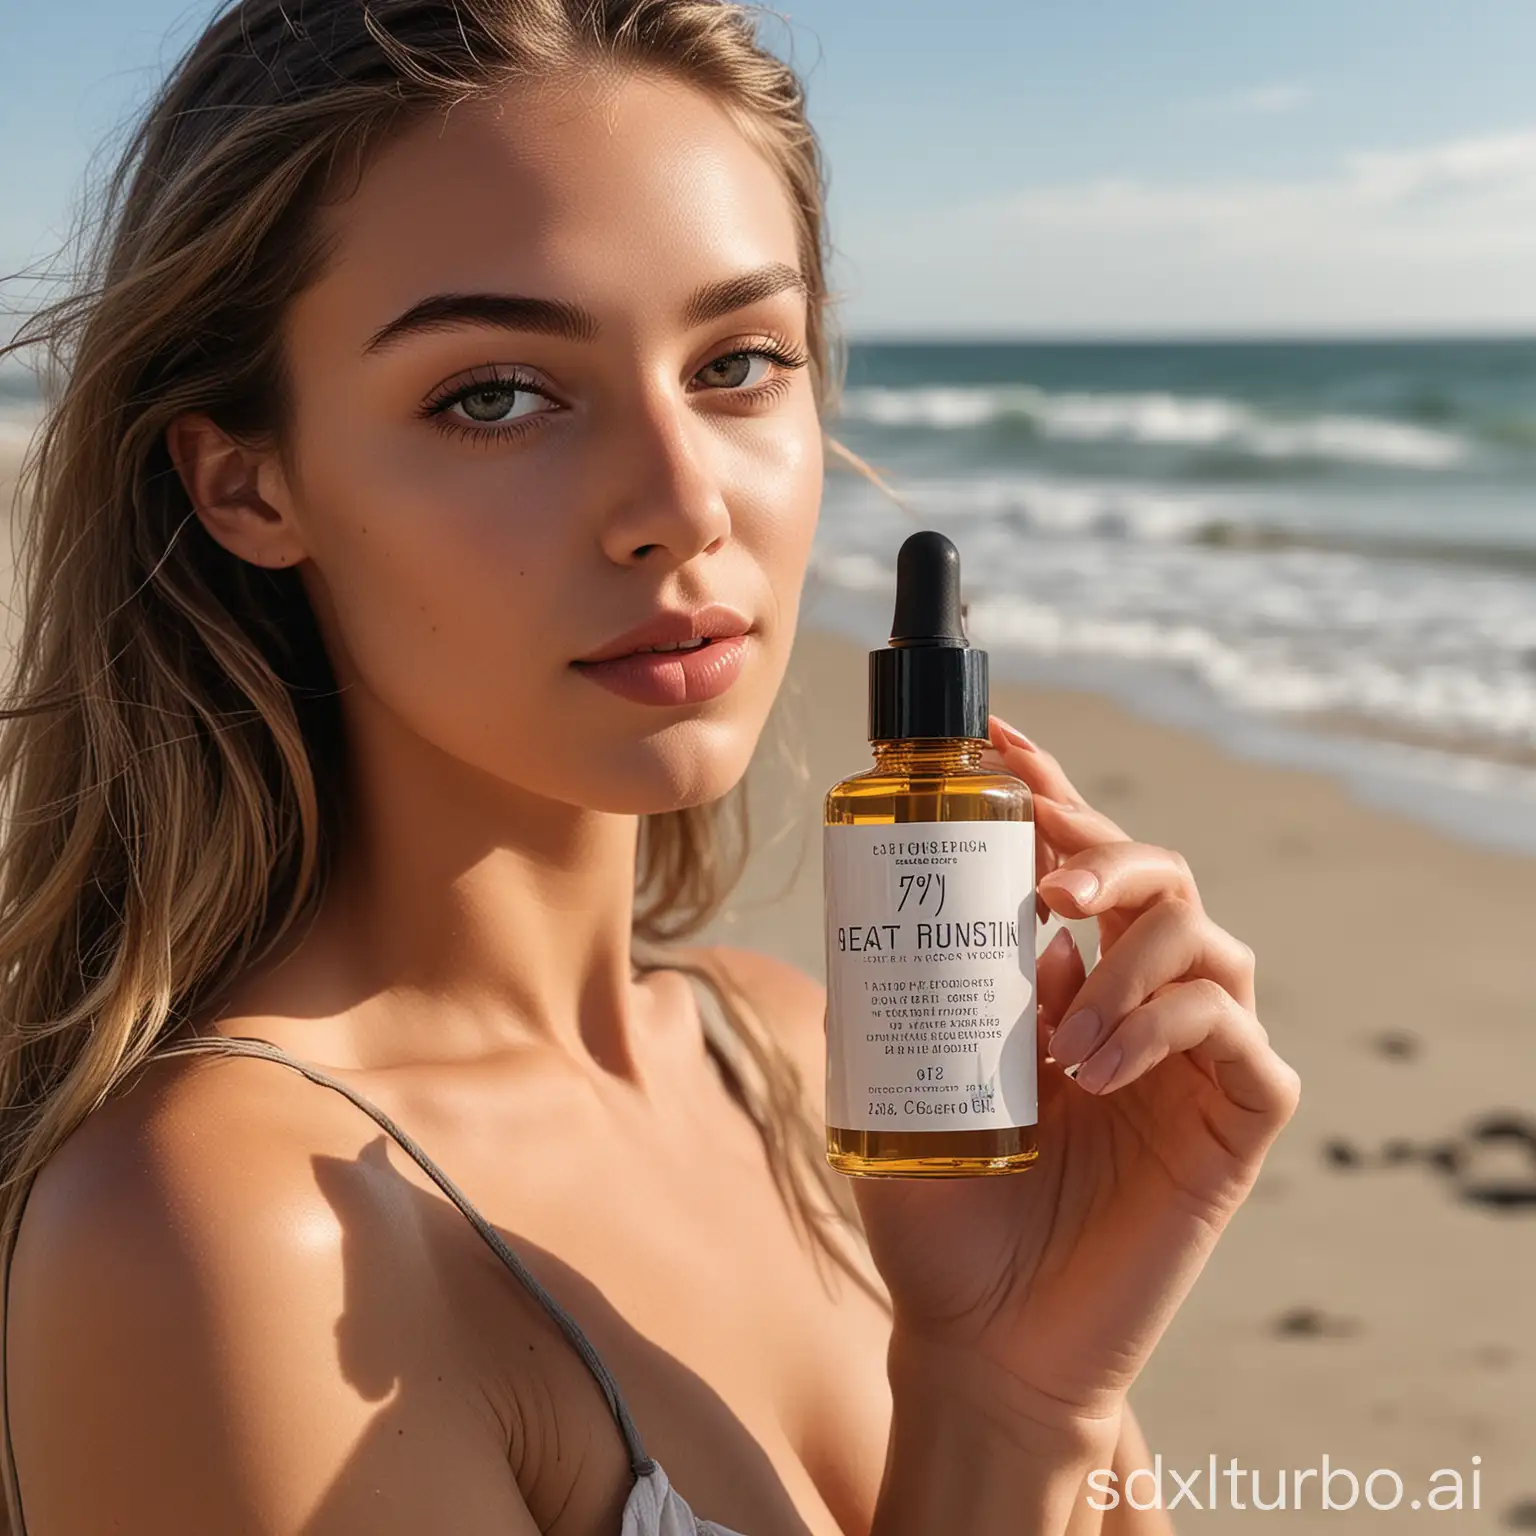 European-American-Female-Model-Posing-with-Beauty-Oil-on-Beach